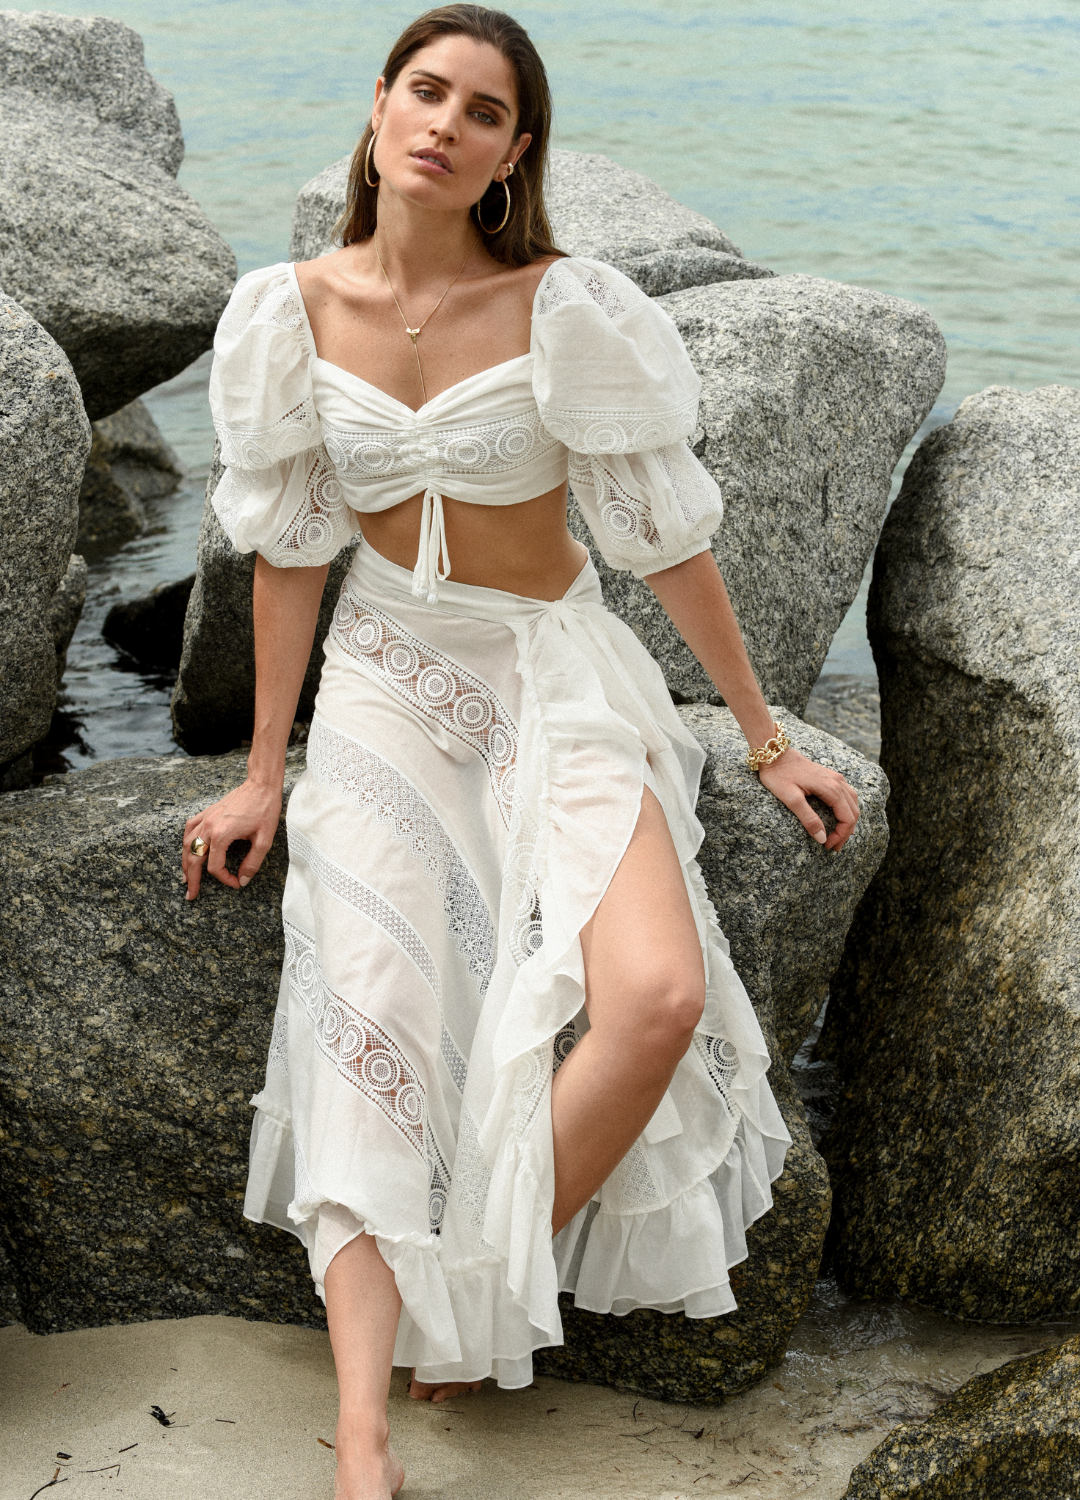 waimari-sevillana-skirt-white